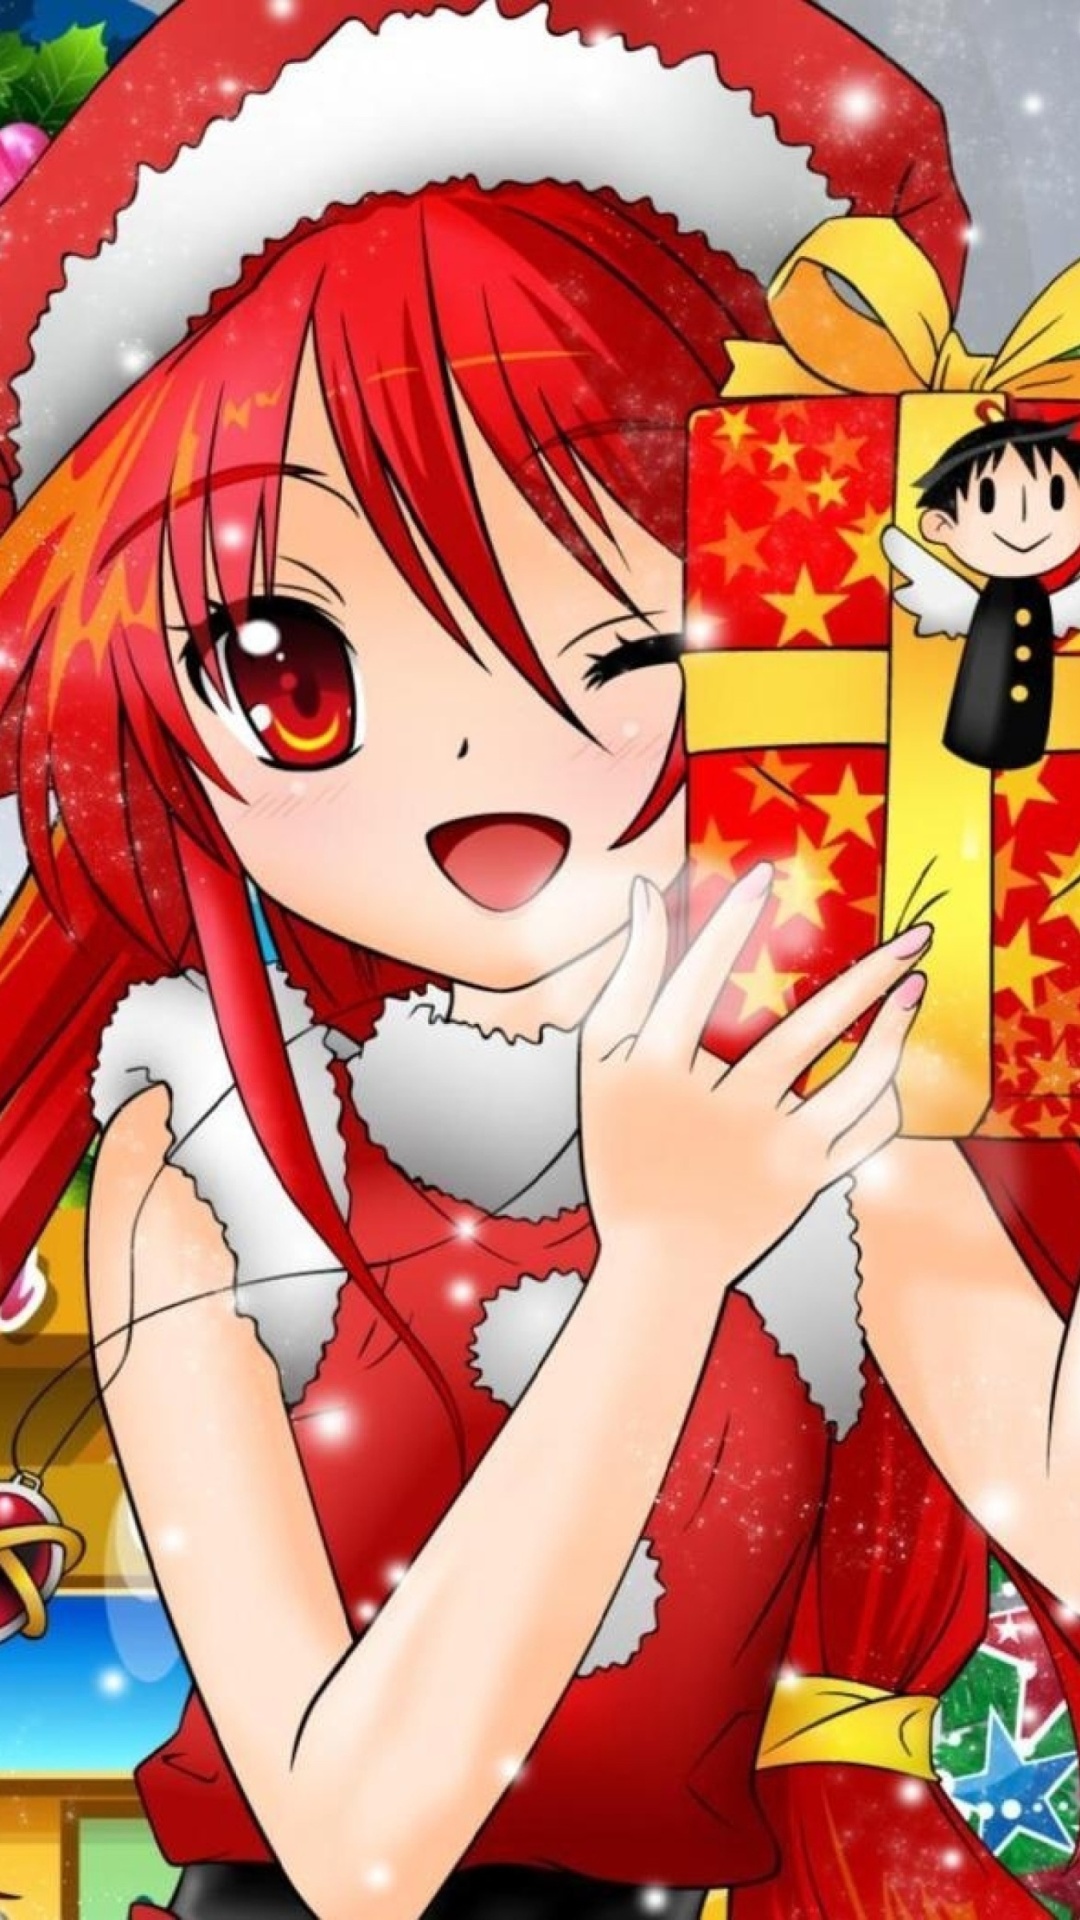 Das Christmas Anime girl Wallpaper 1080x1920